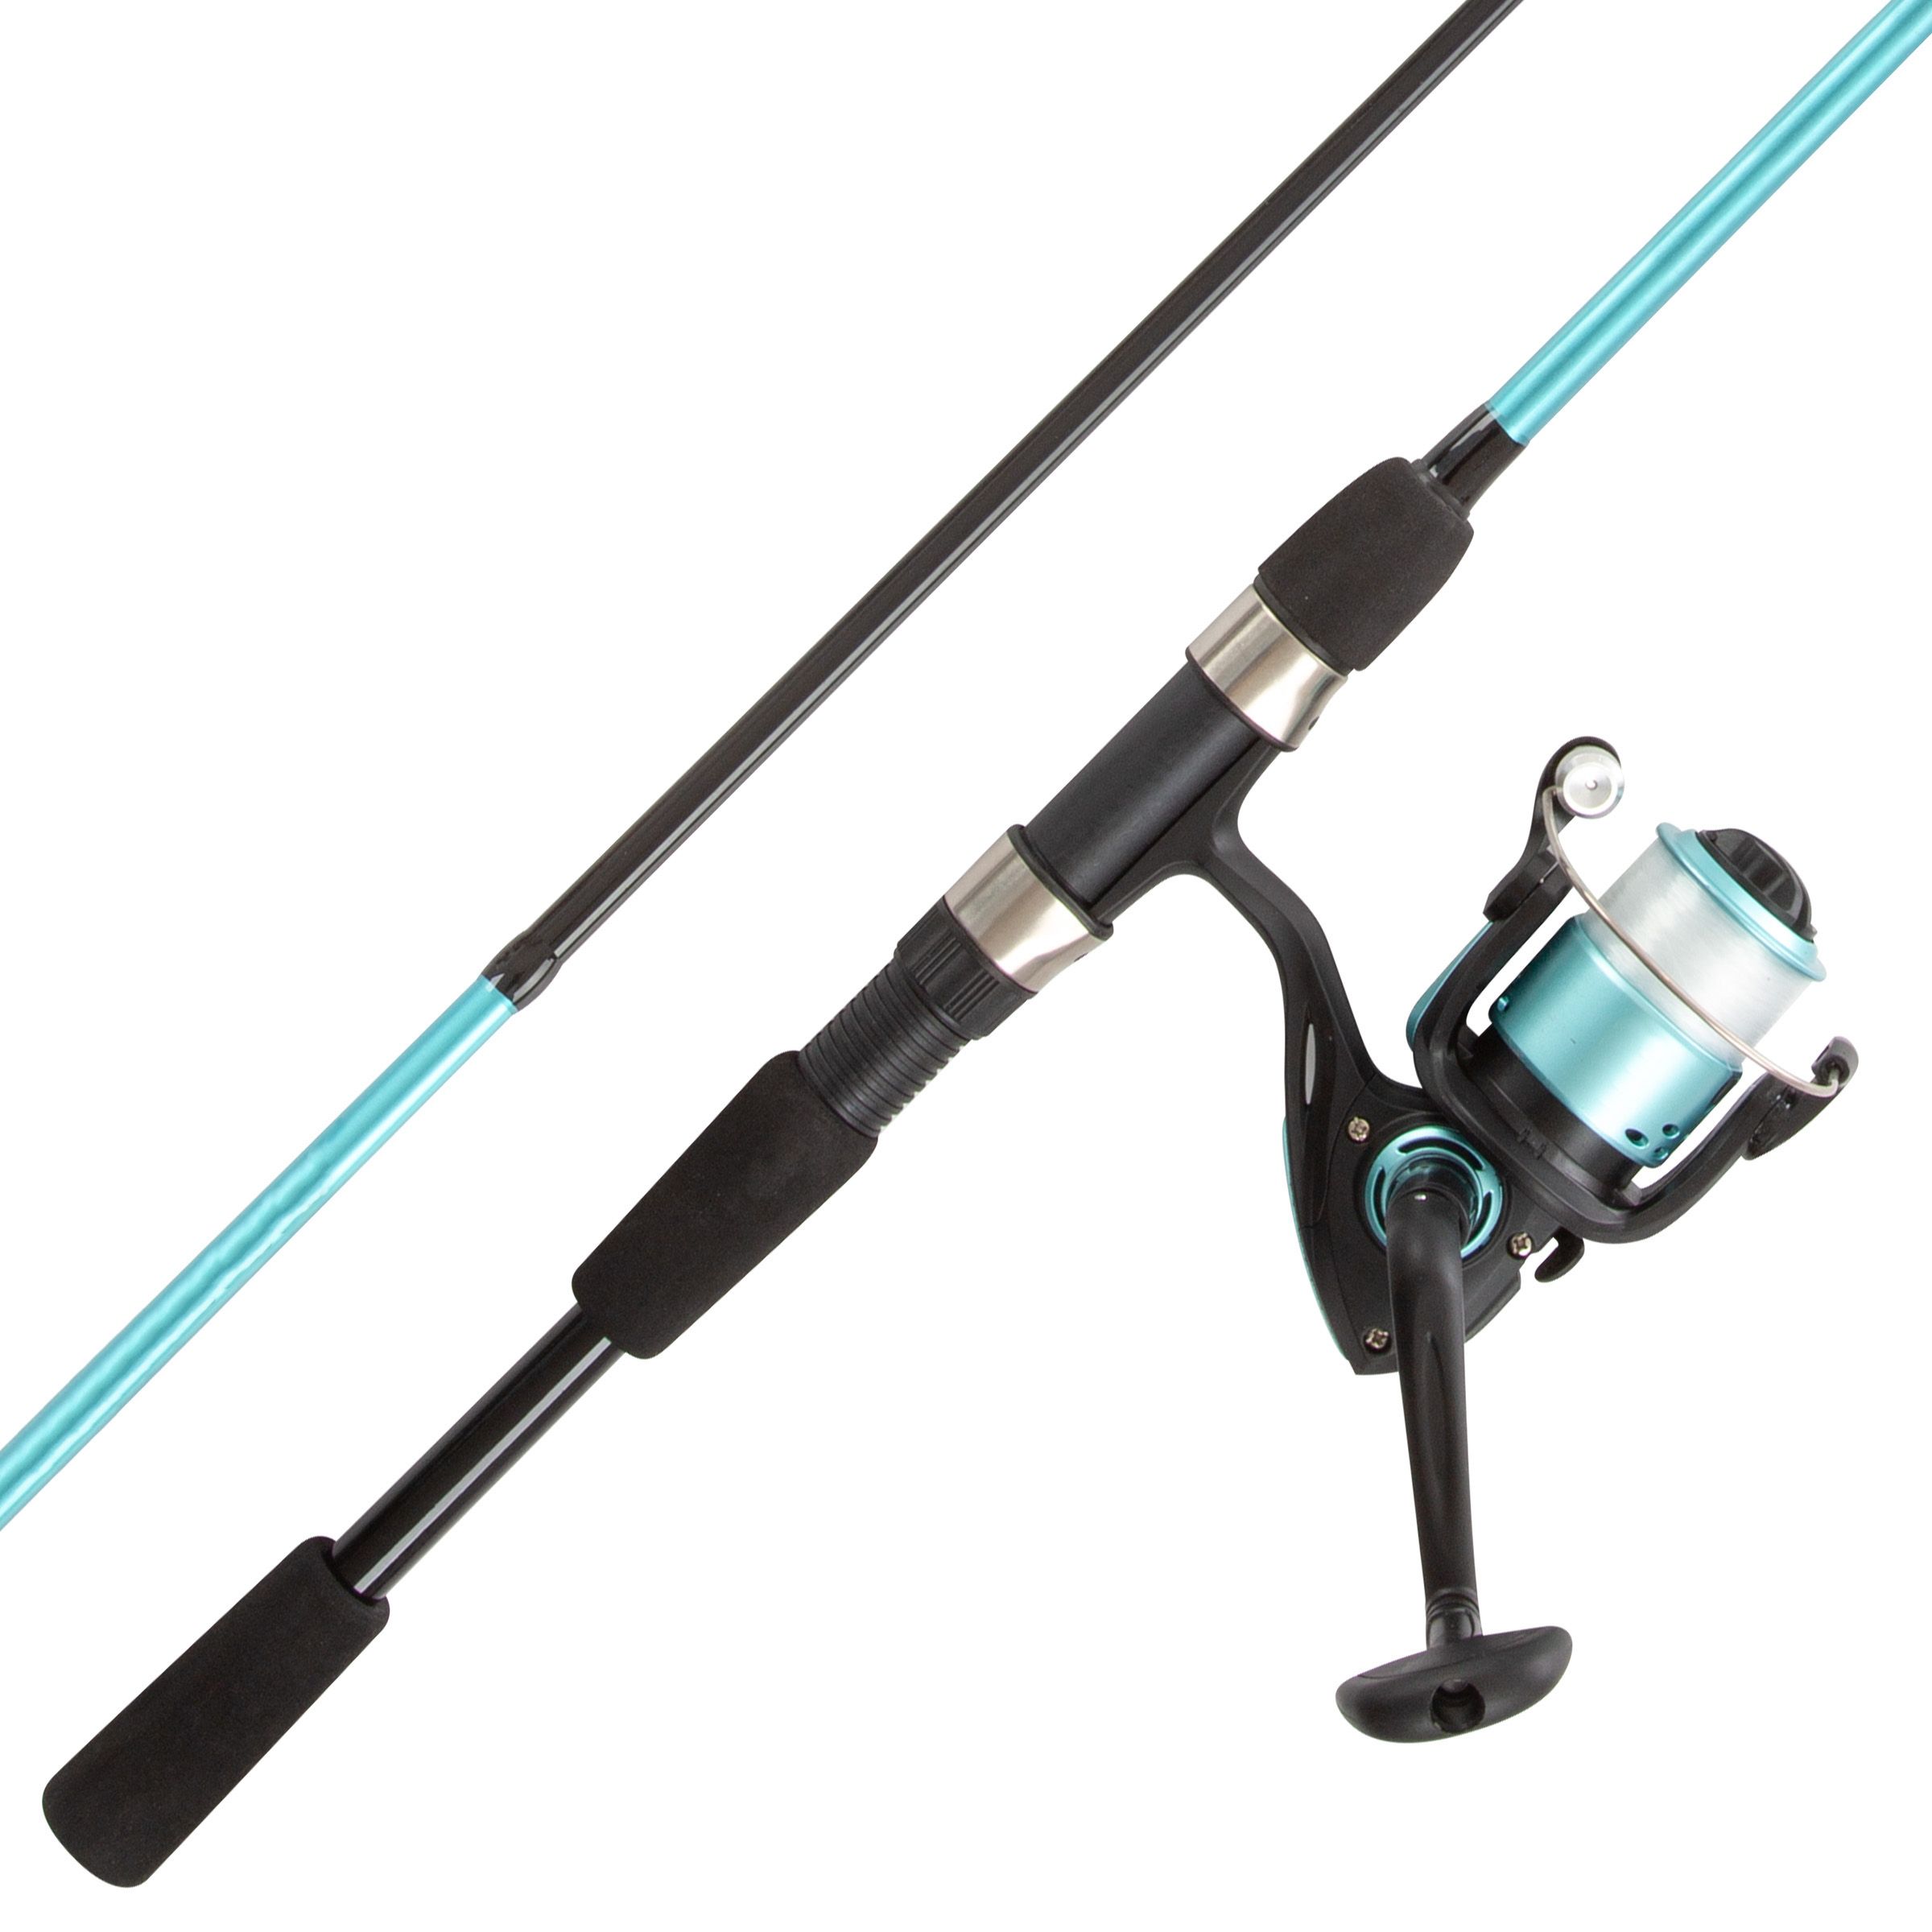 Leisure Sports Beginner Spinning RH Fishing Rod and Reel Combo - Light Blue